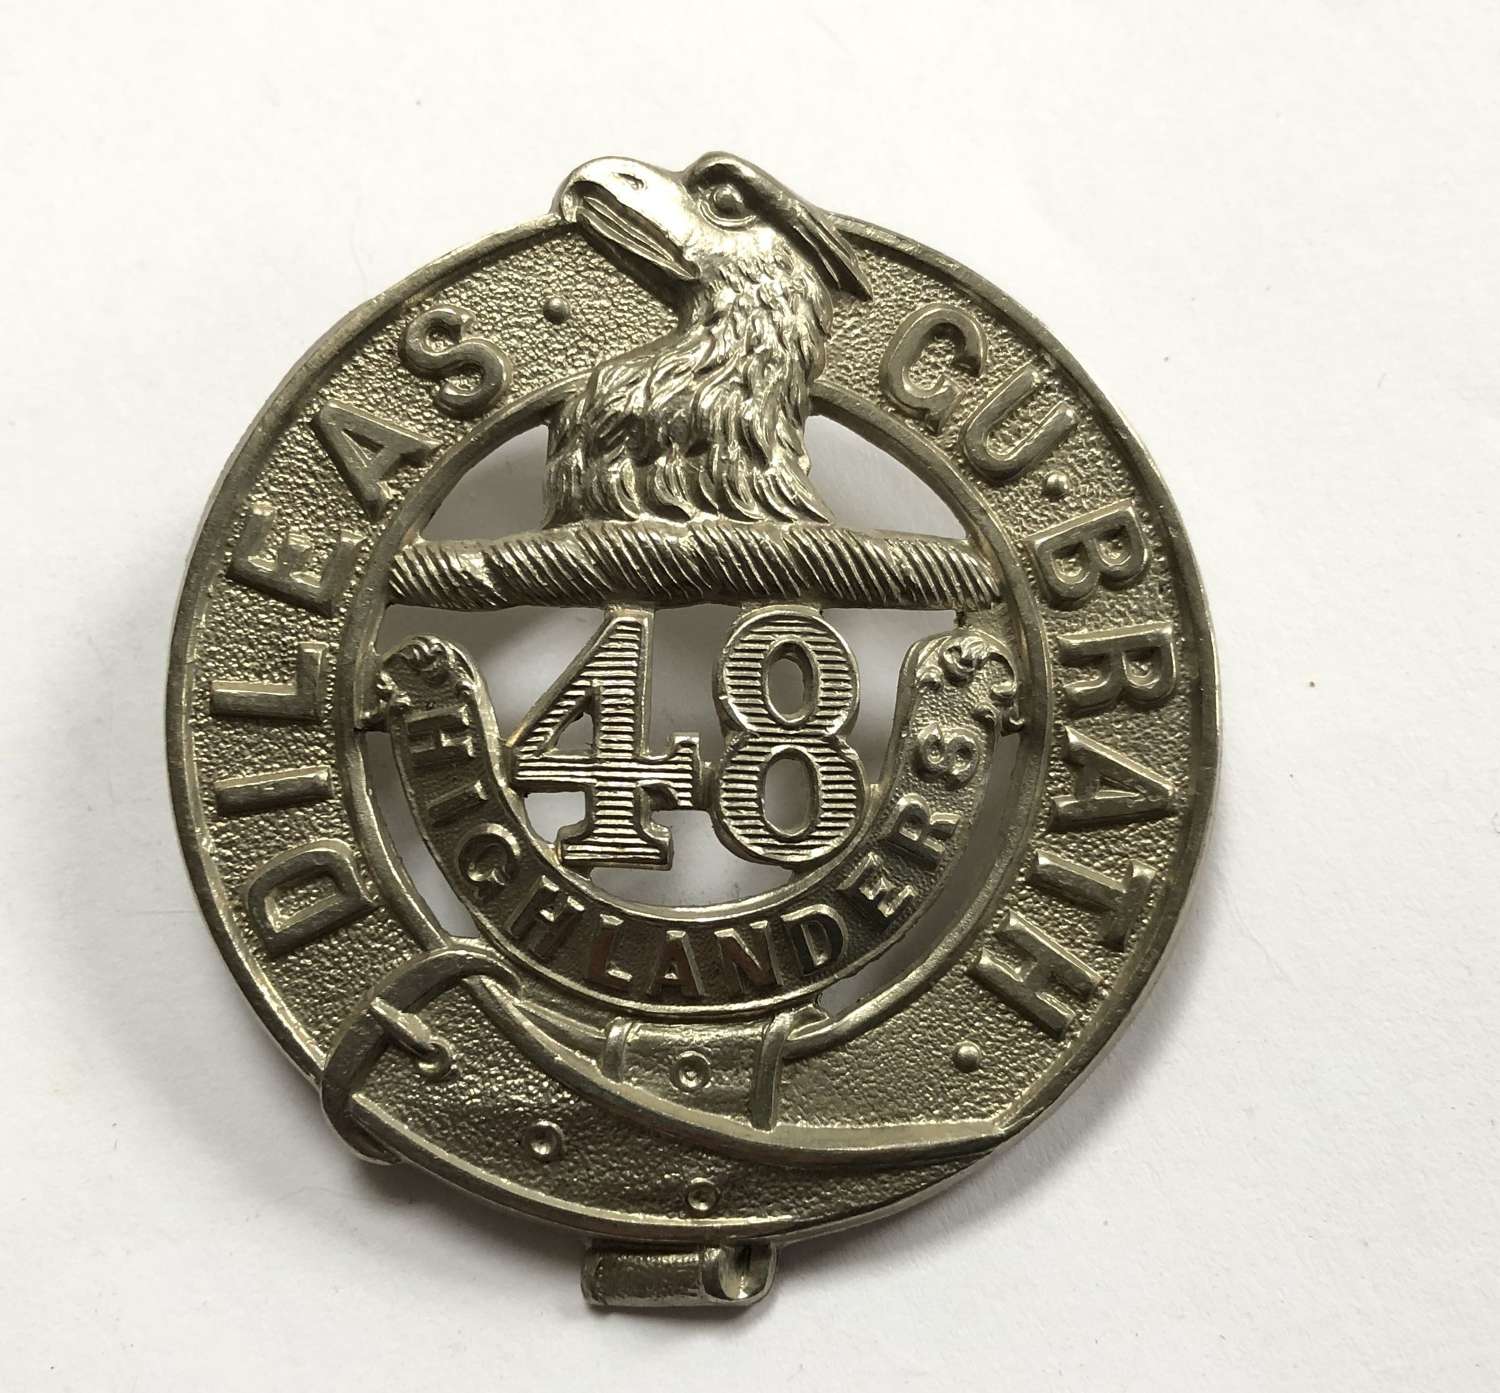 Canadian 48th Highlanders glengarry badge by Tiptaft